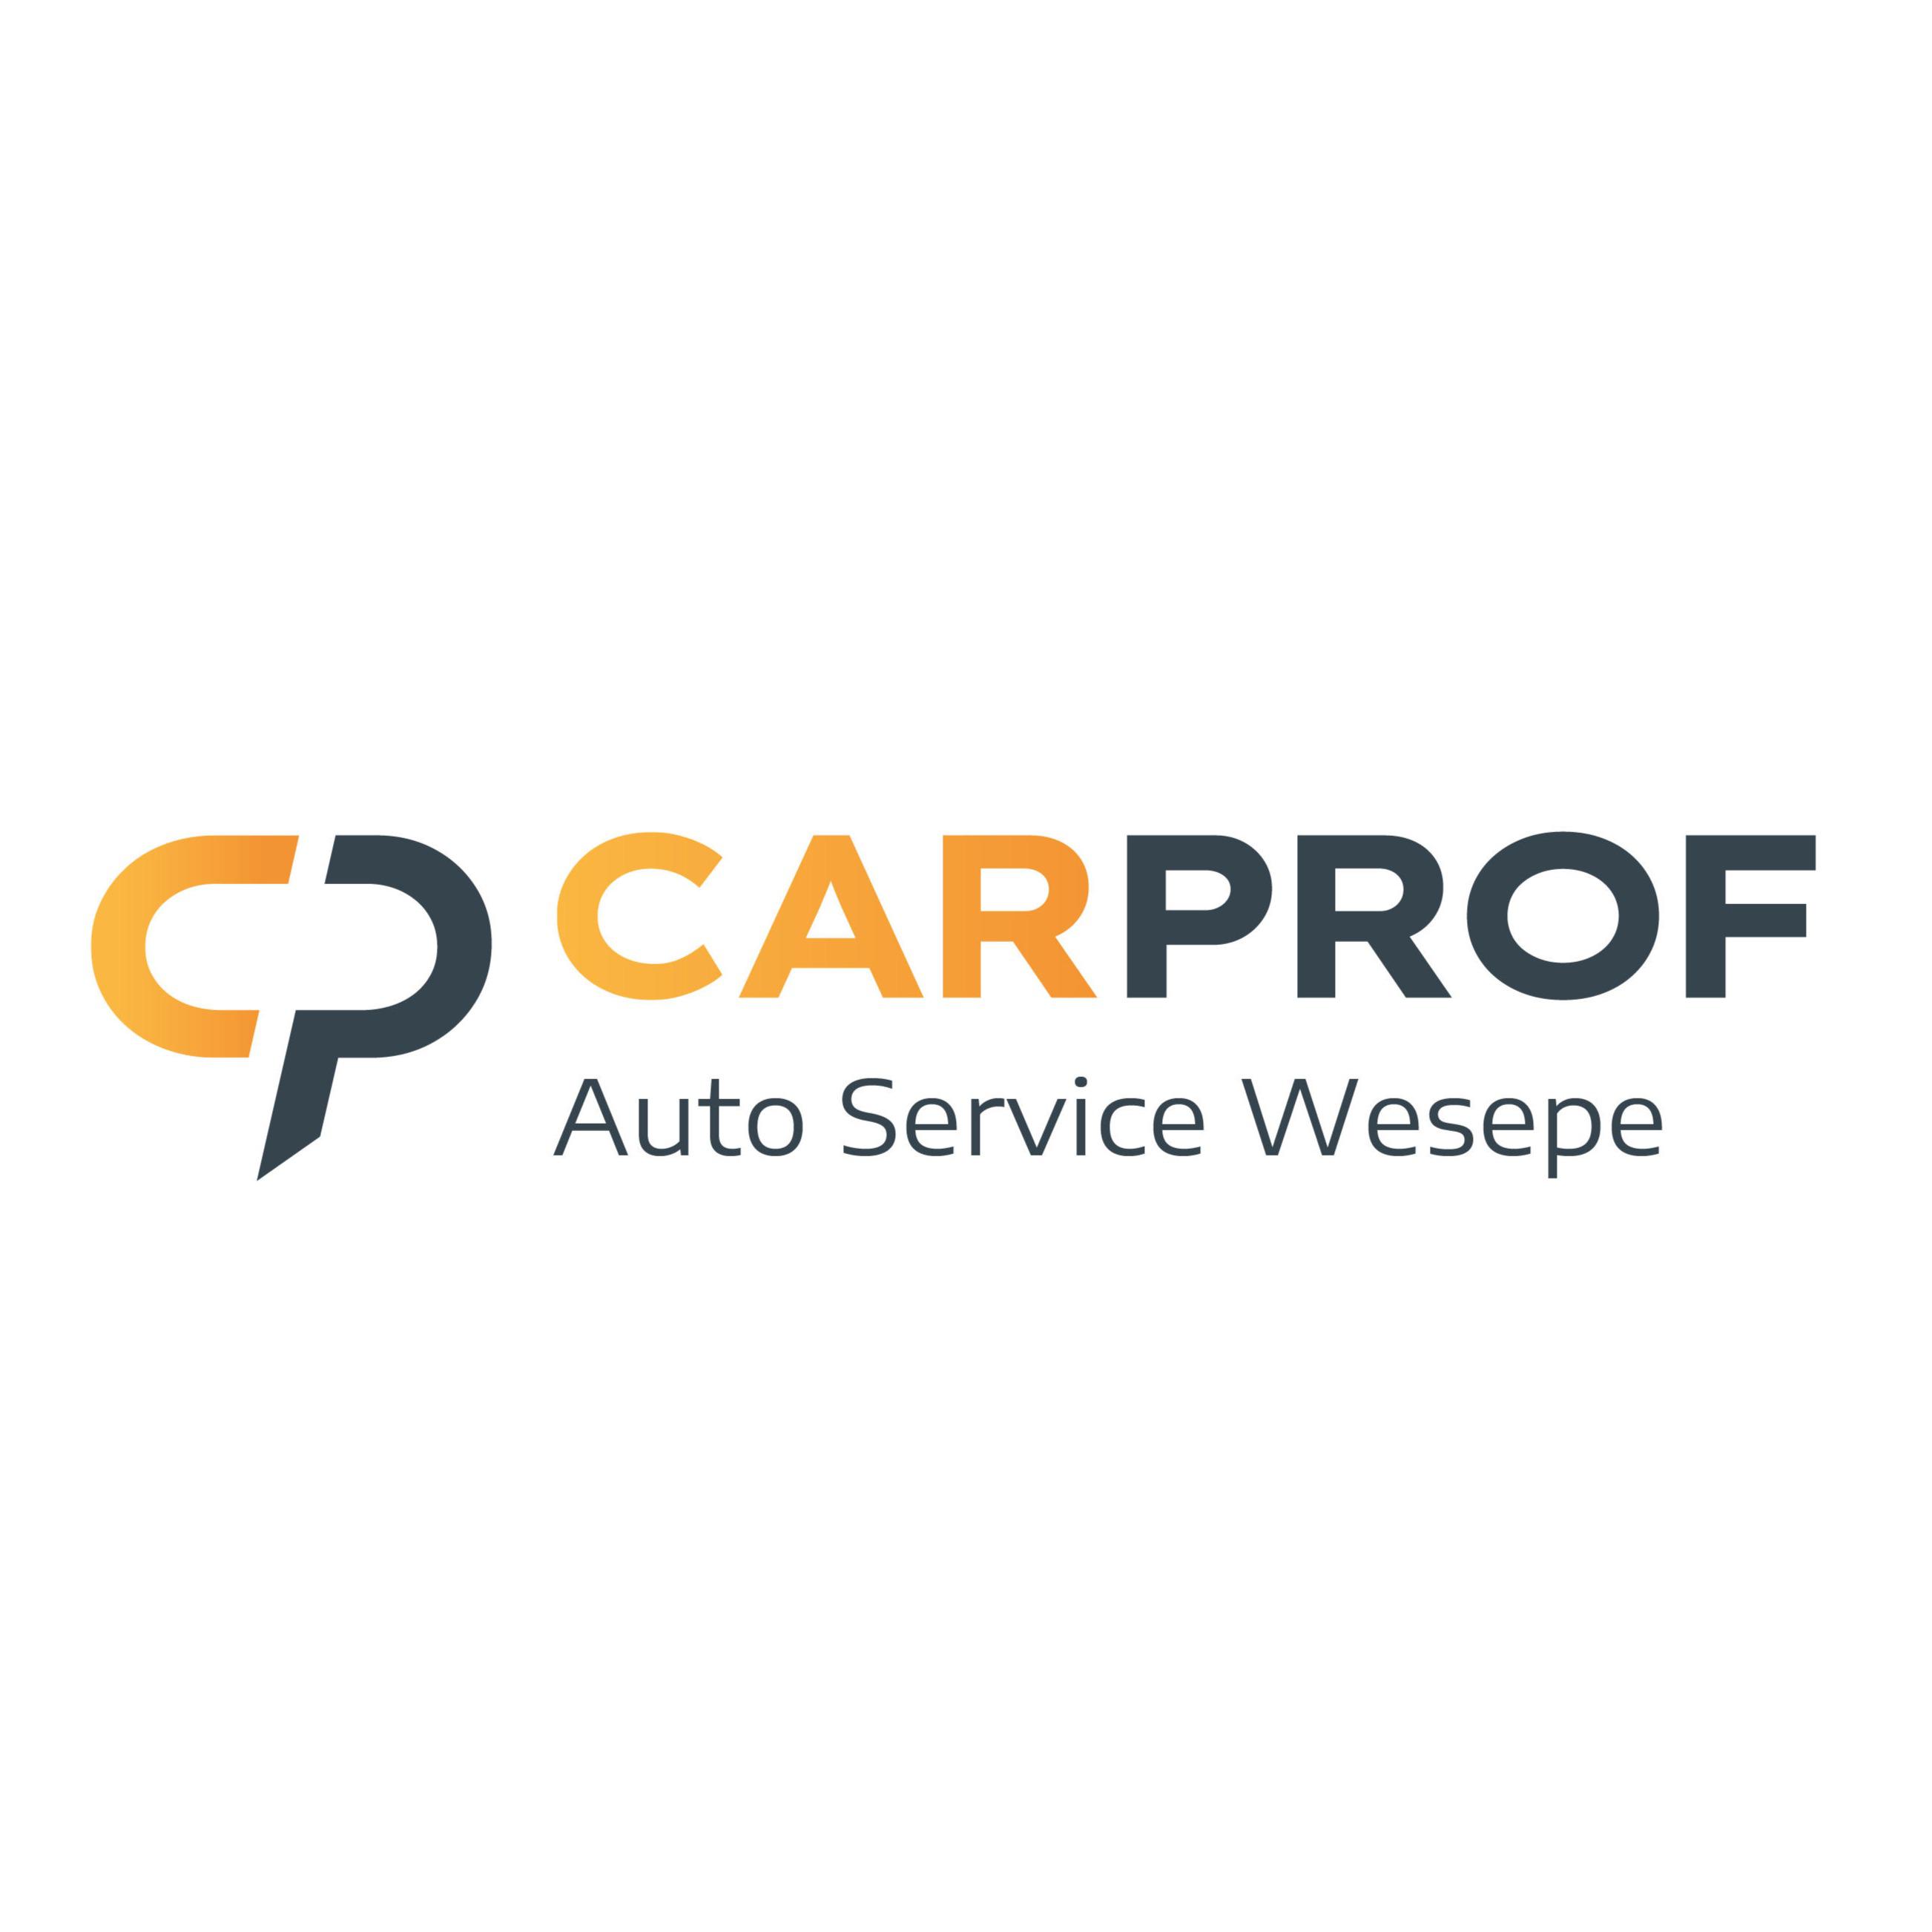 CarProf Auto Service Wesepe Logo